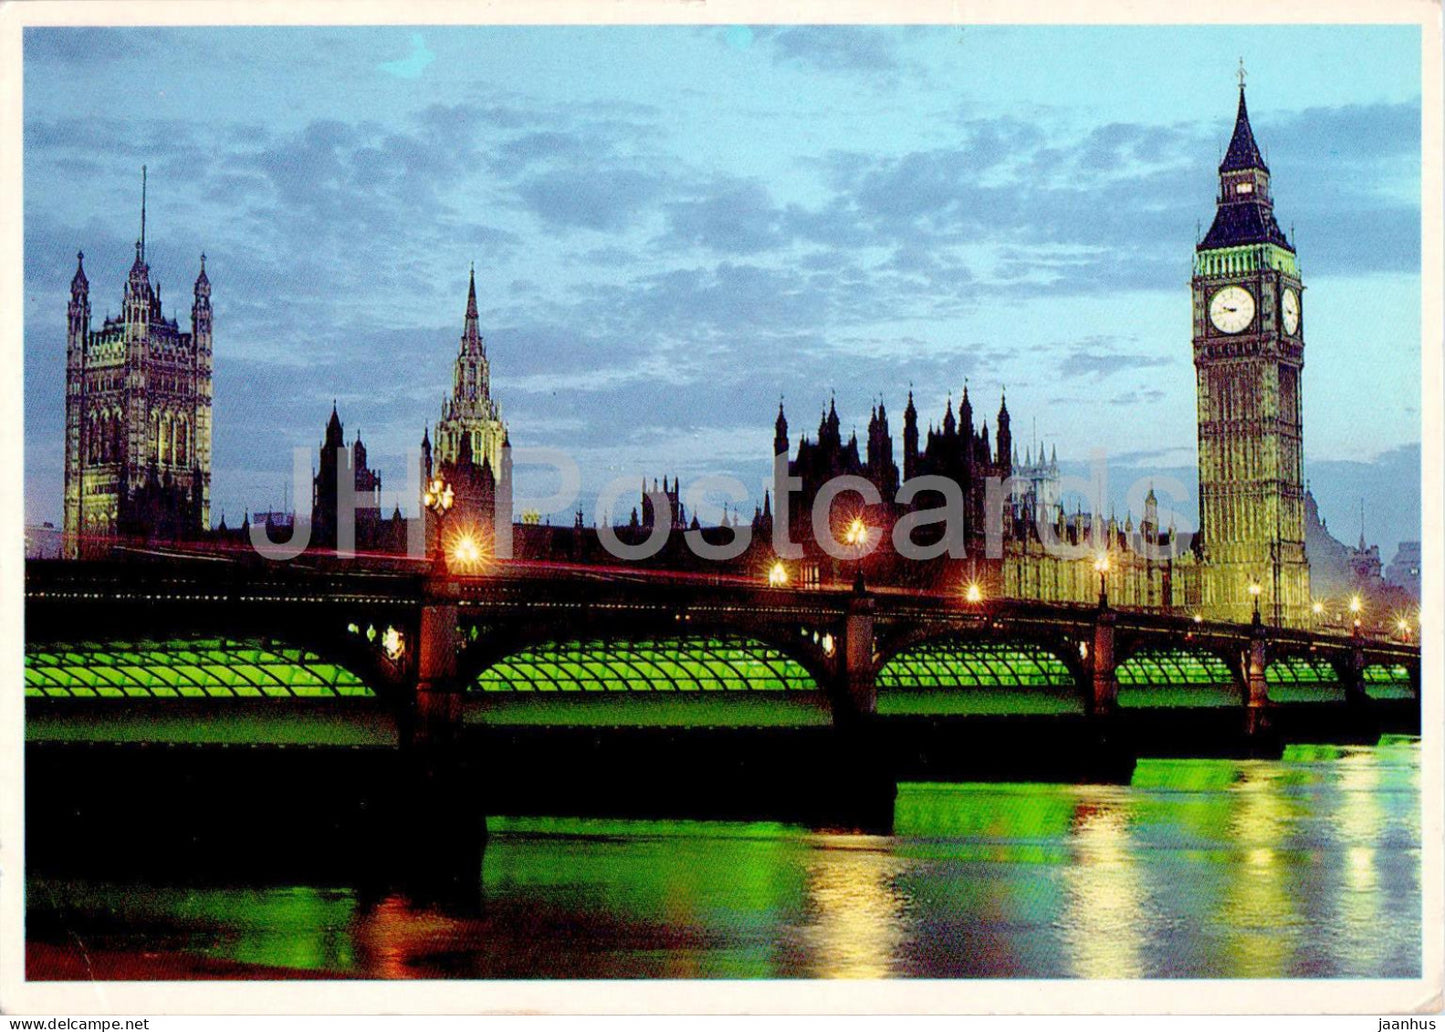 London - Houses of Parliament - bridge - A8 - 1994 - England - United Kingdom - used